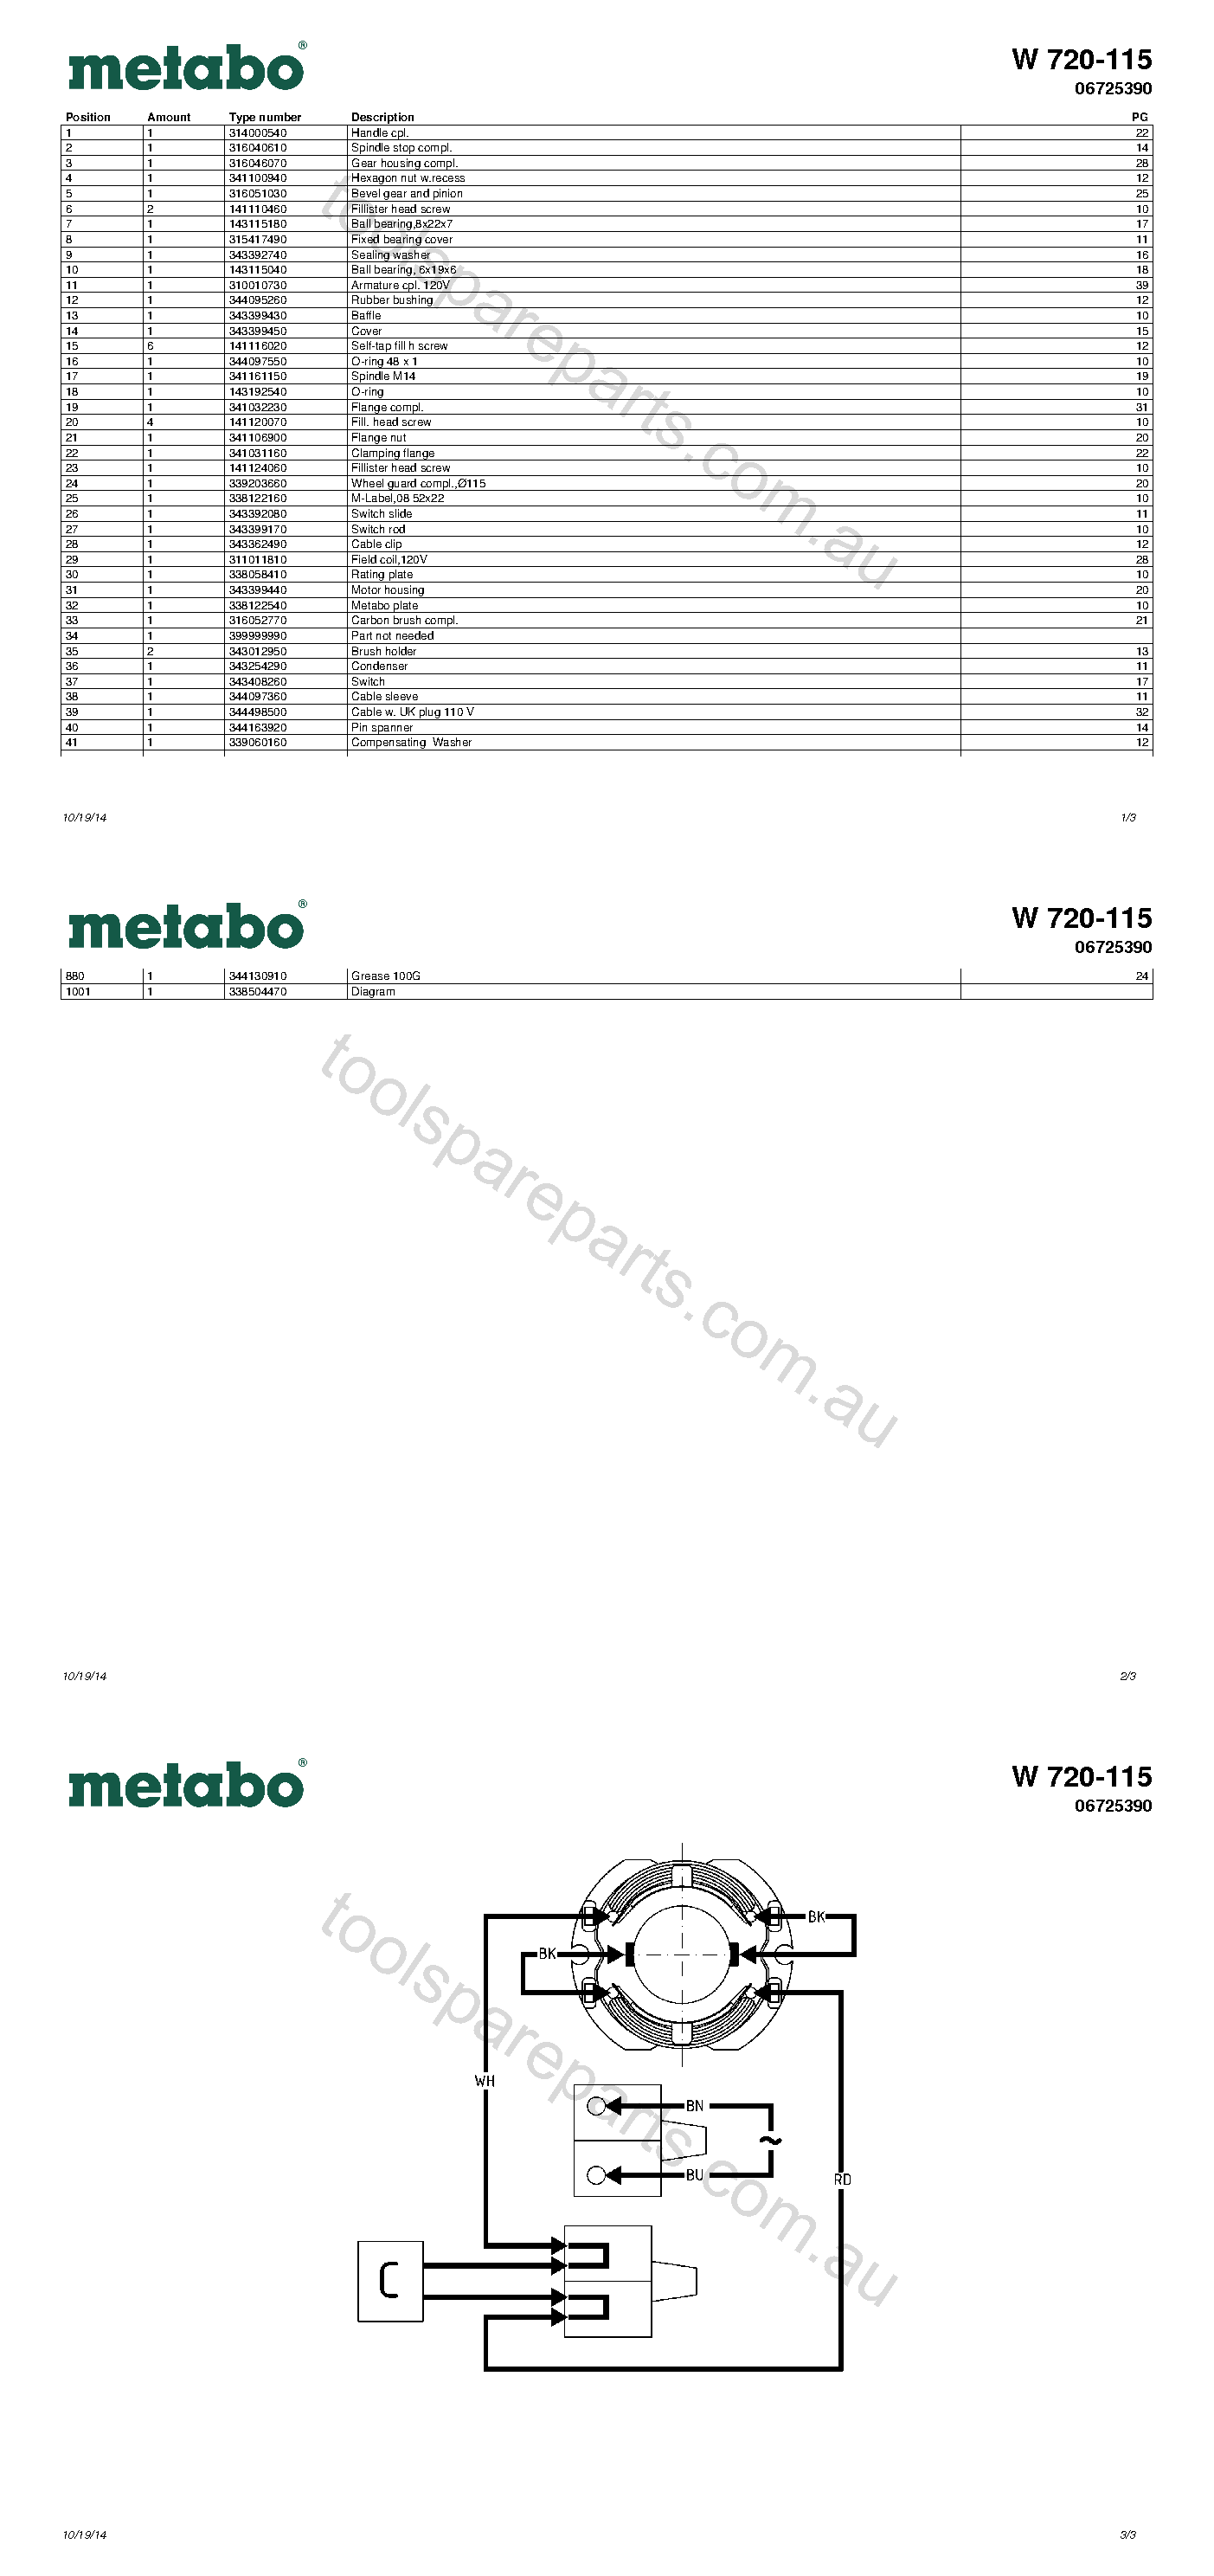 Metabo W 720-115 06725390  Diagram 1